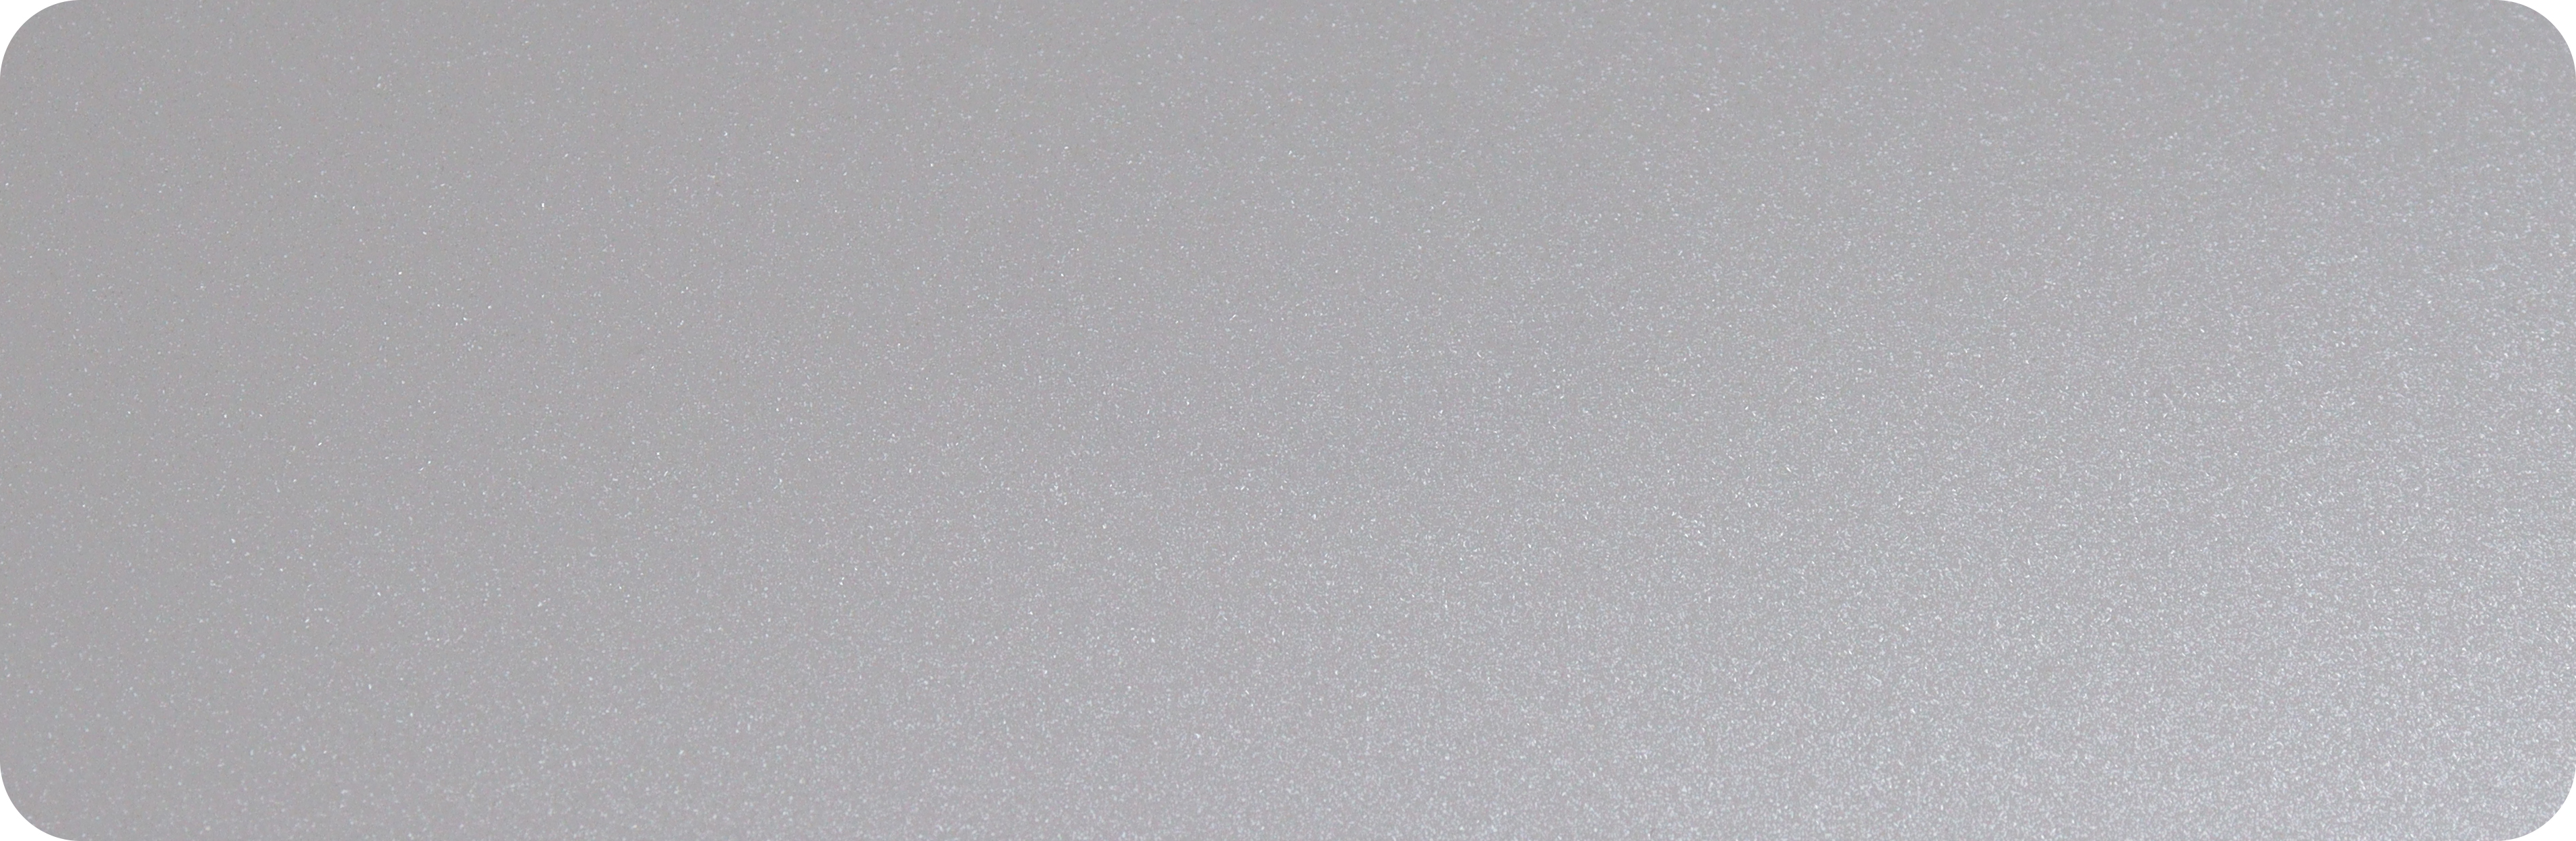 1.TPU钻石白-TPU-diamant blanc